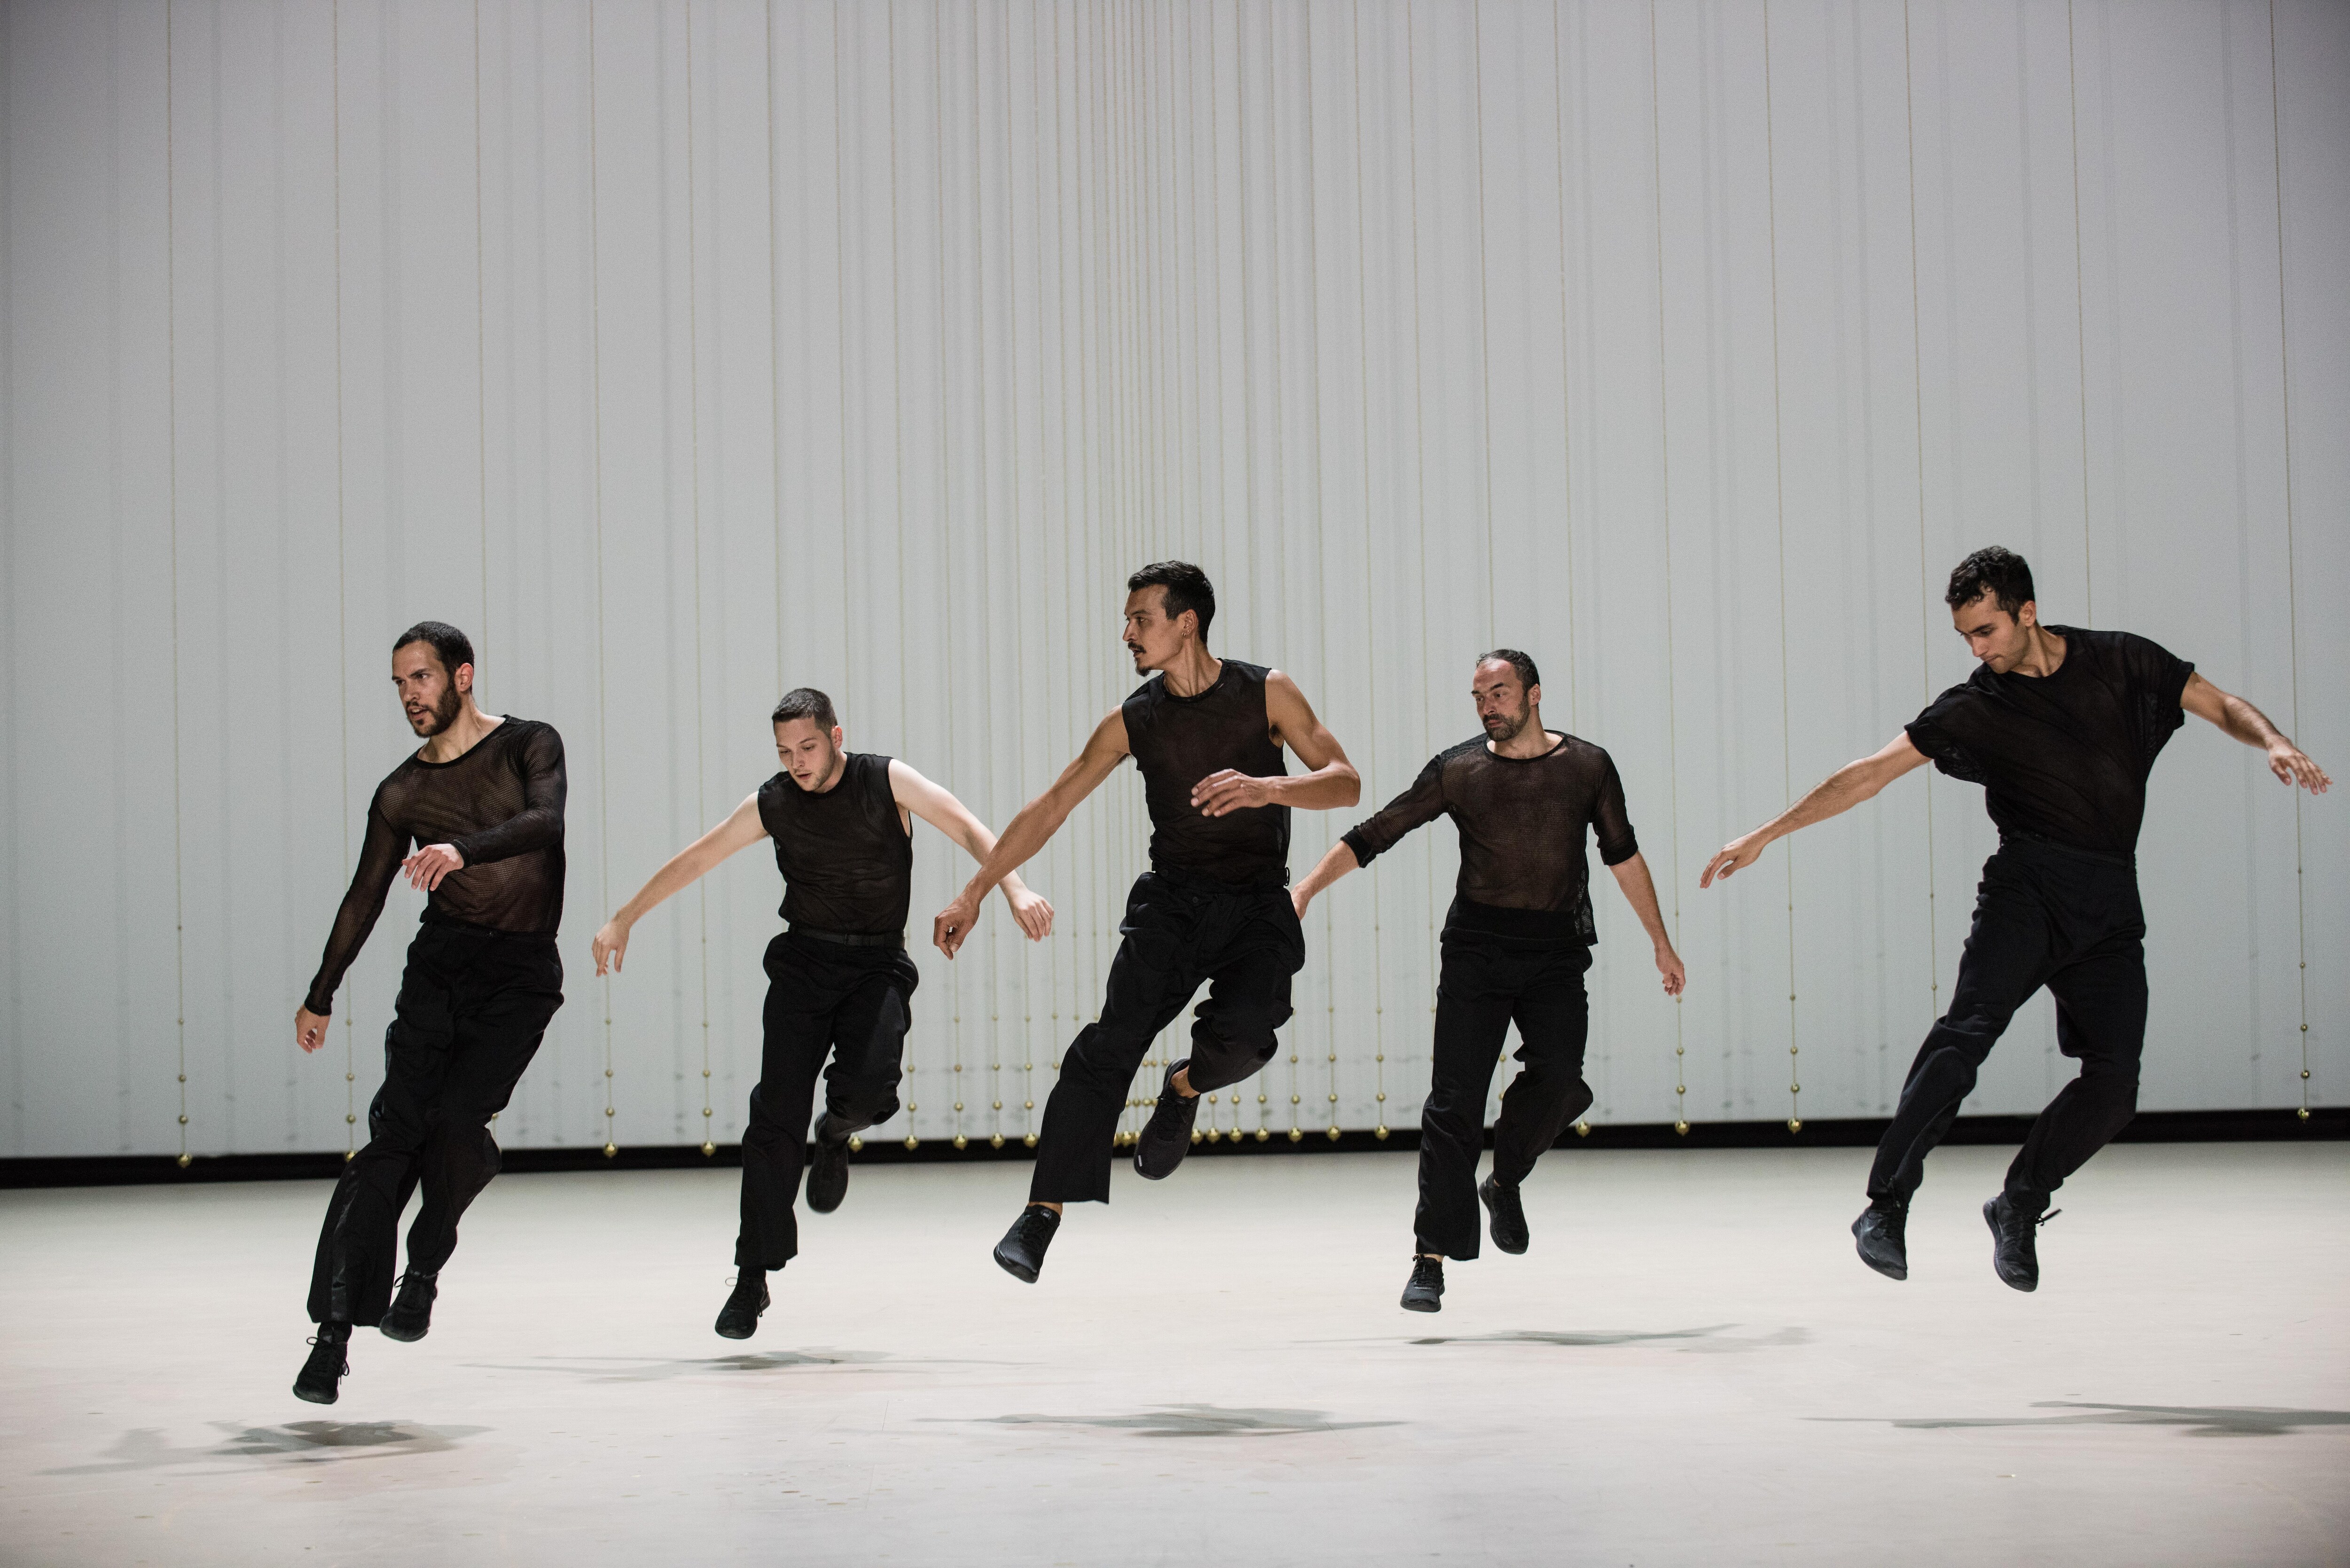 Five dancers wearing black, jumping